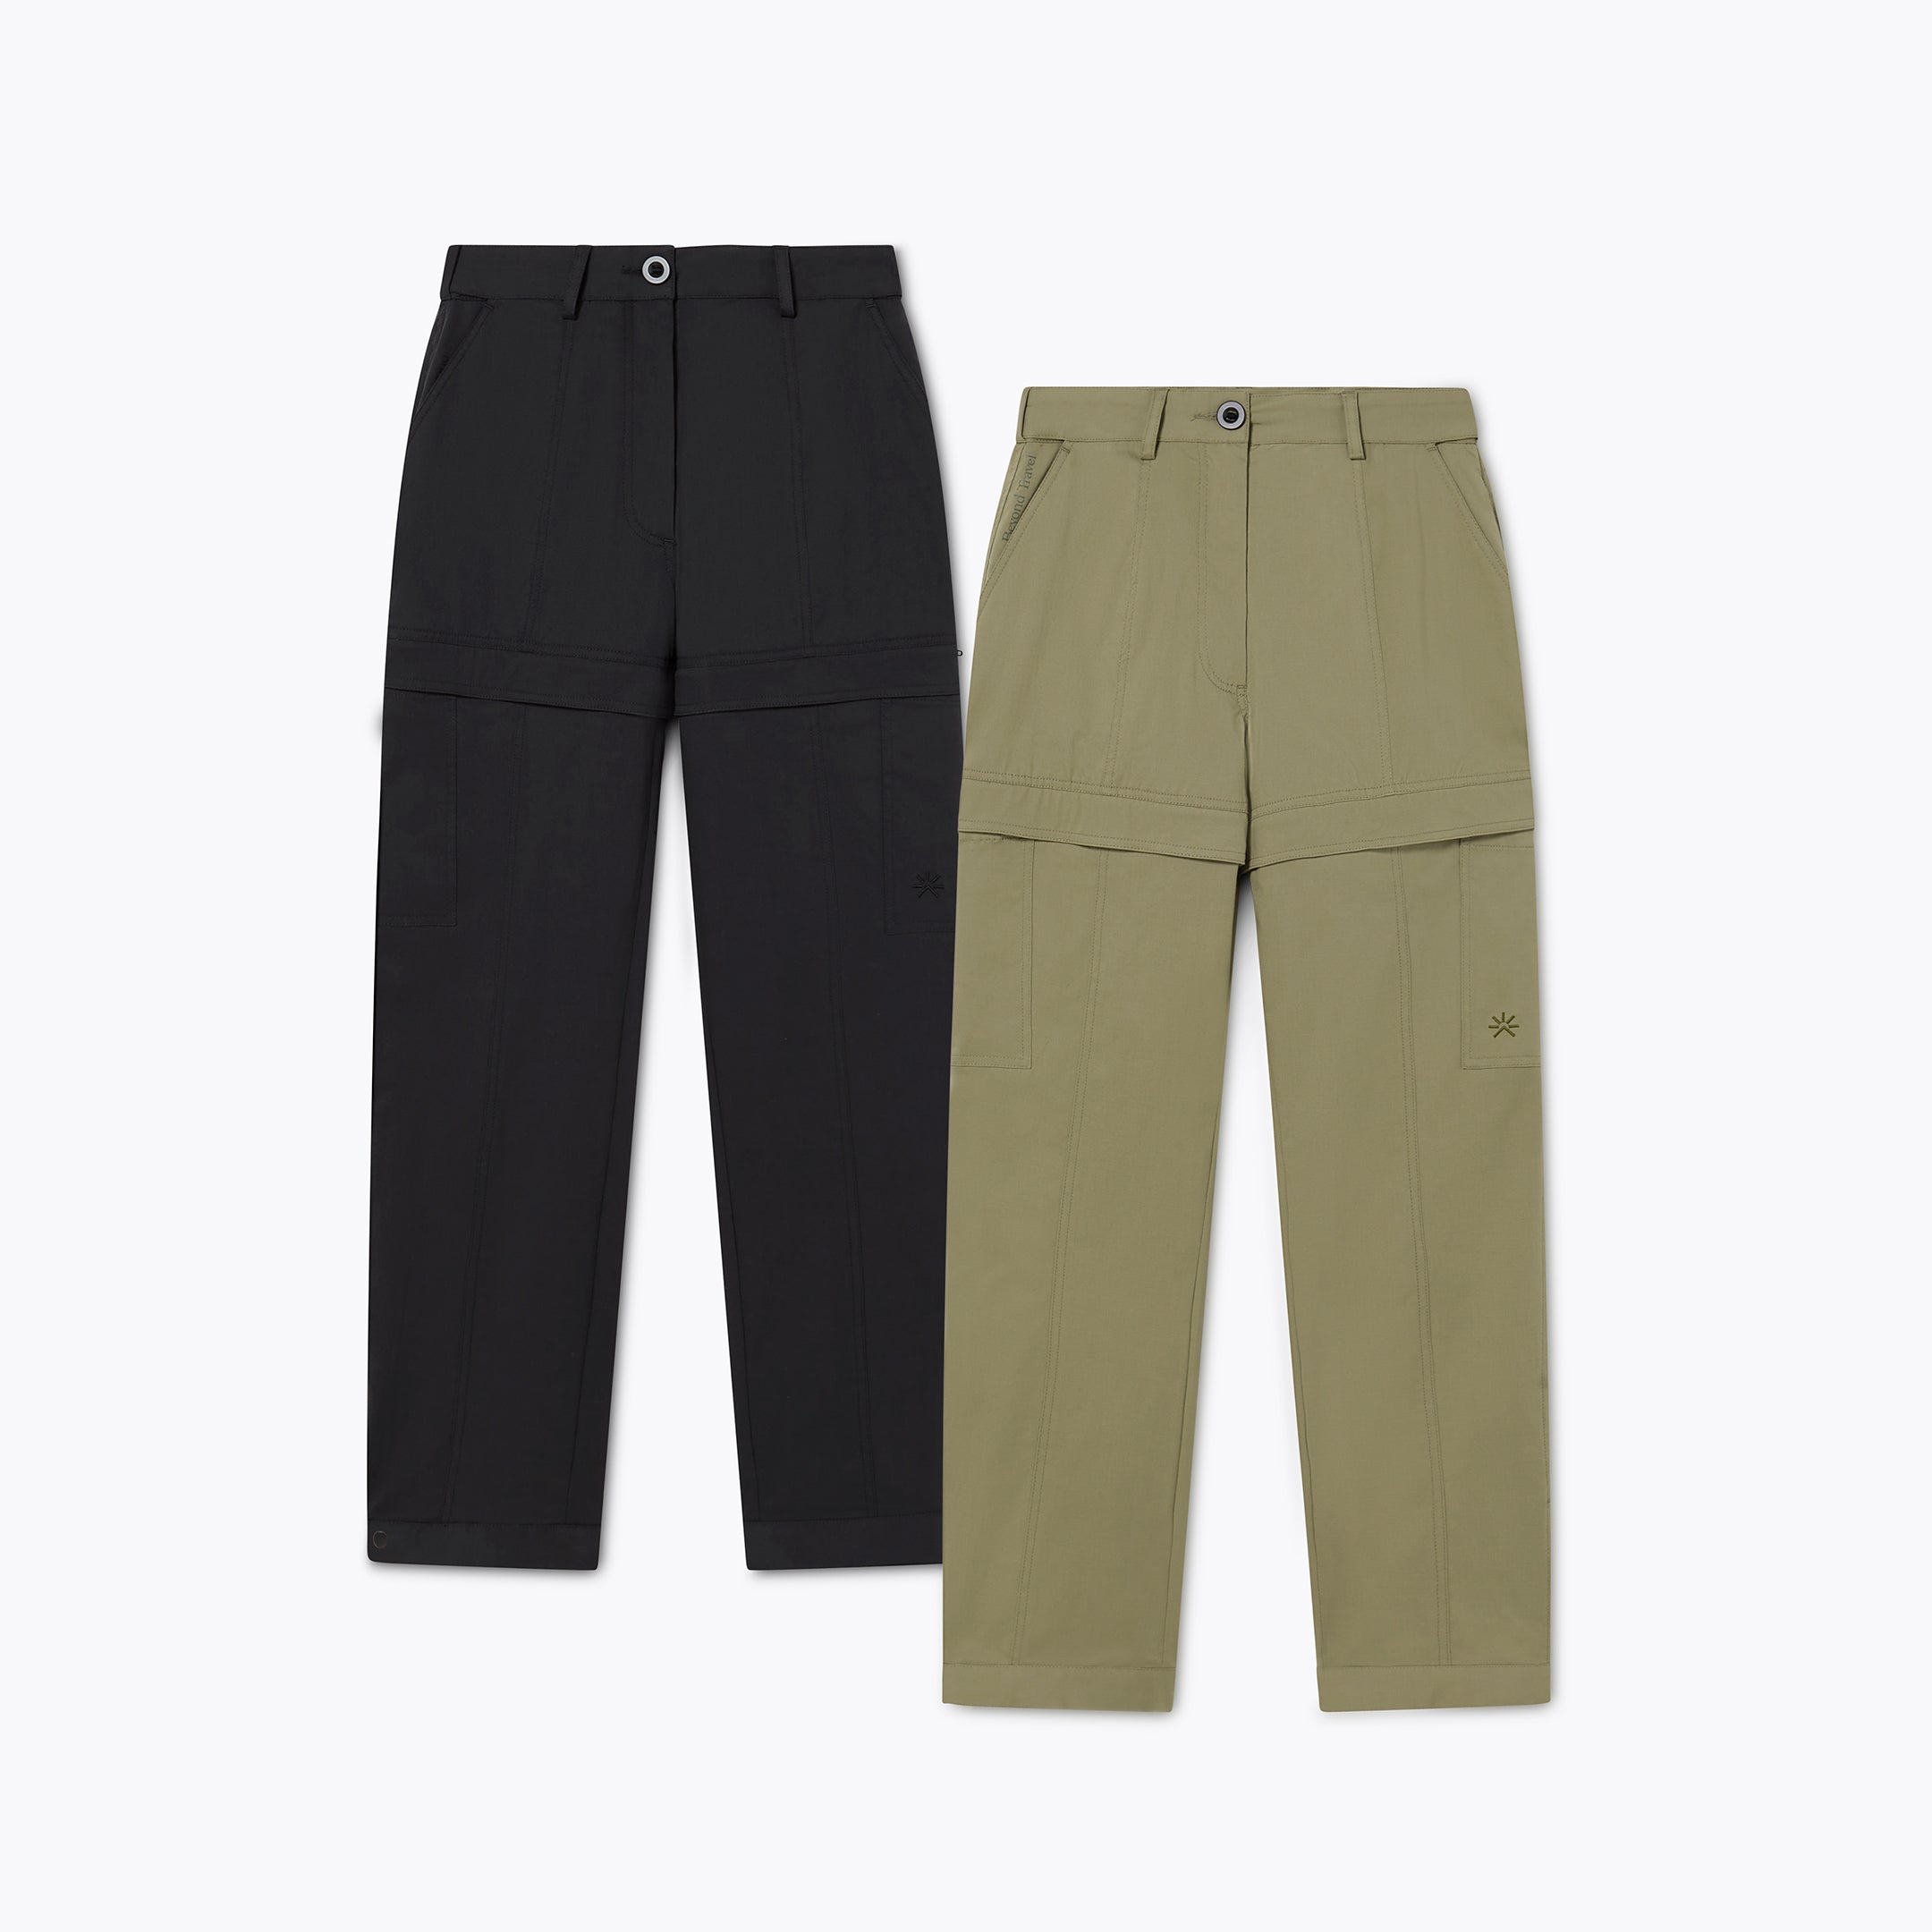 Women's Zip-Off Pants All Black & Sage Khaki